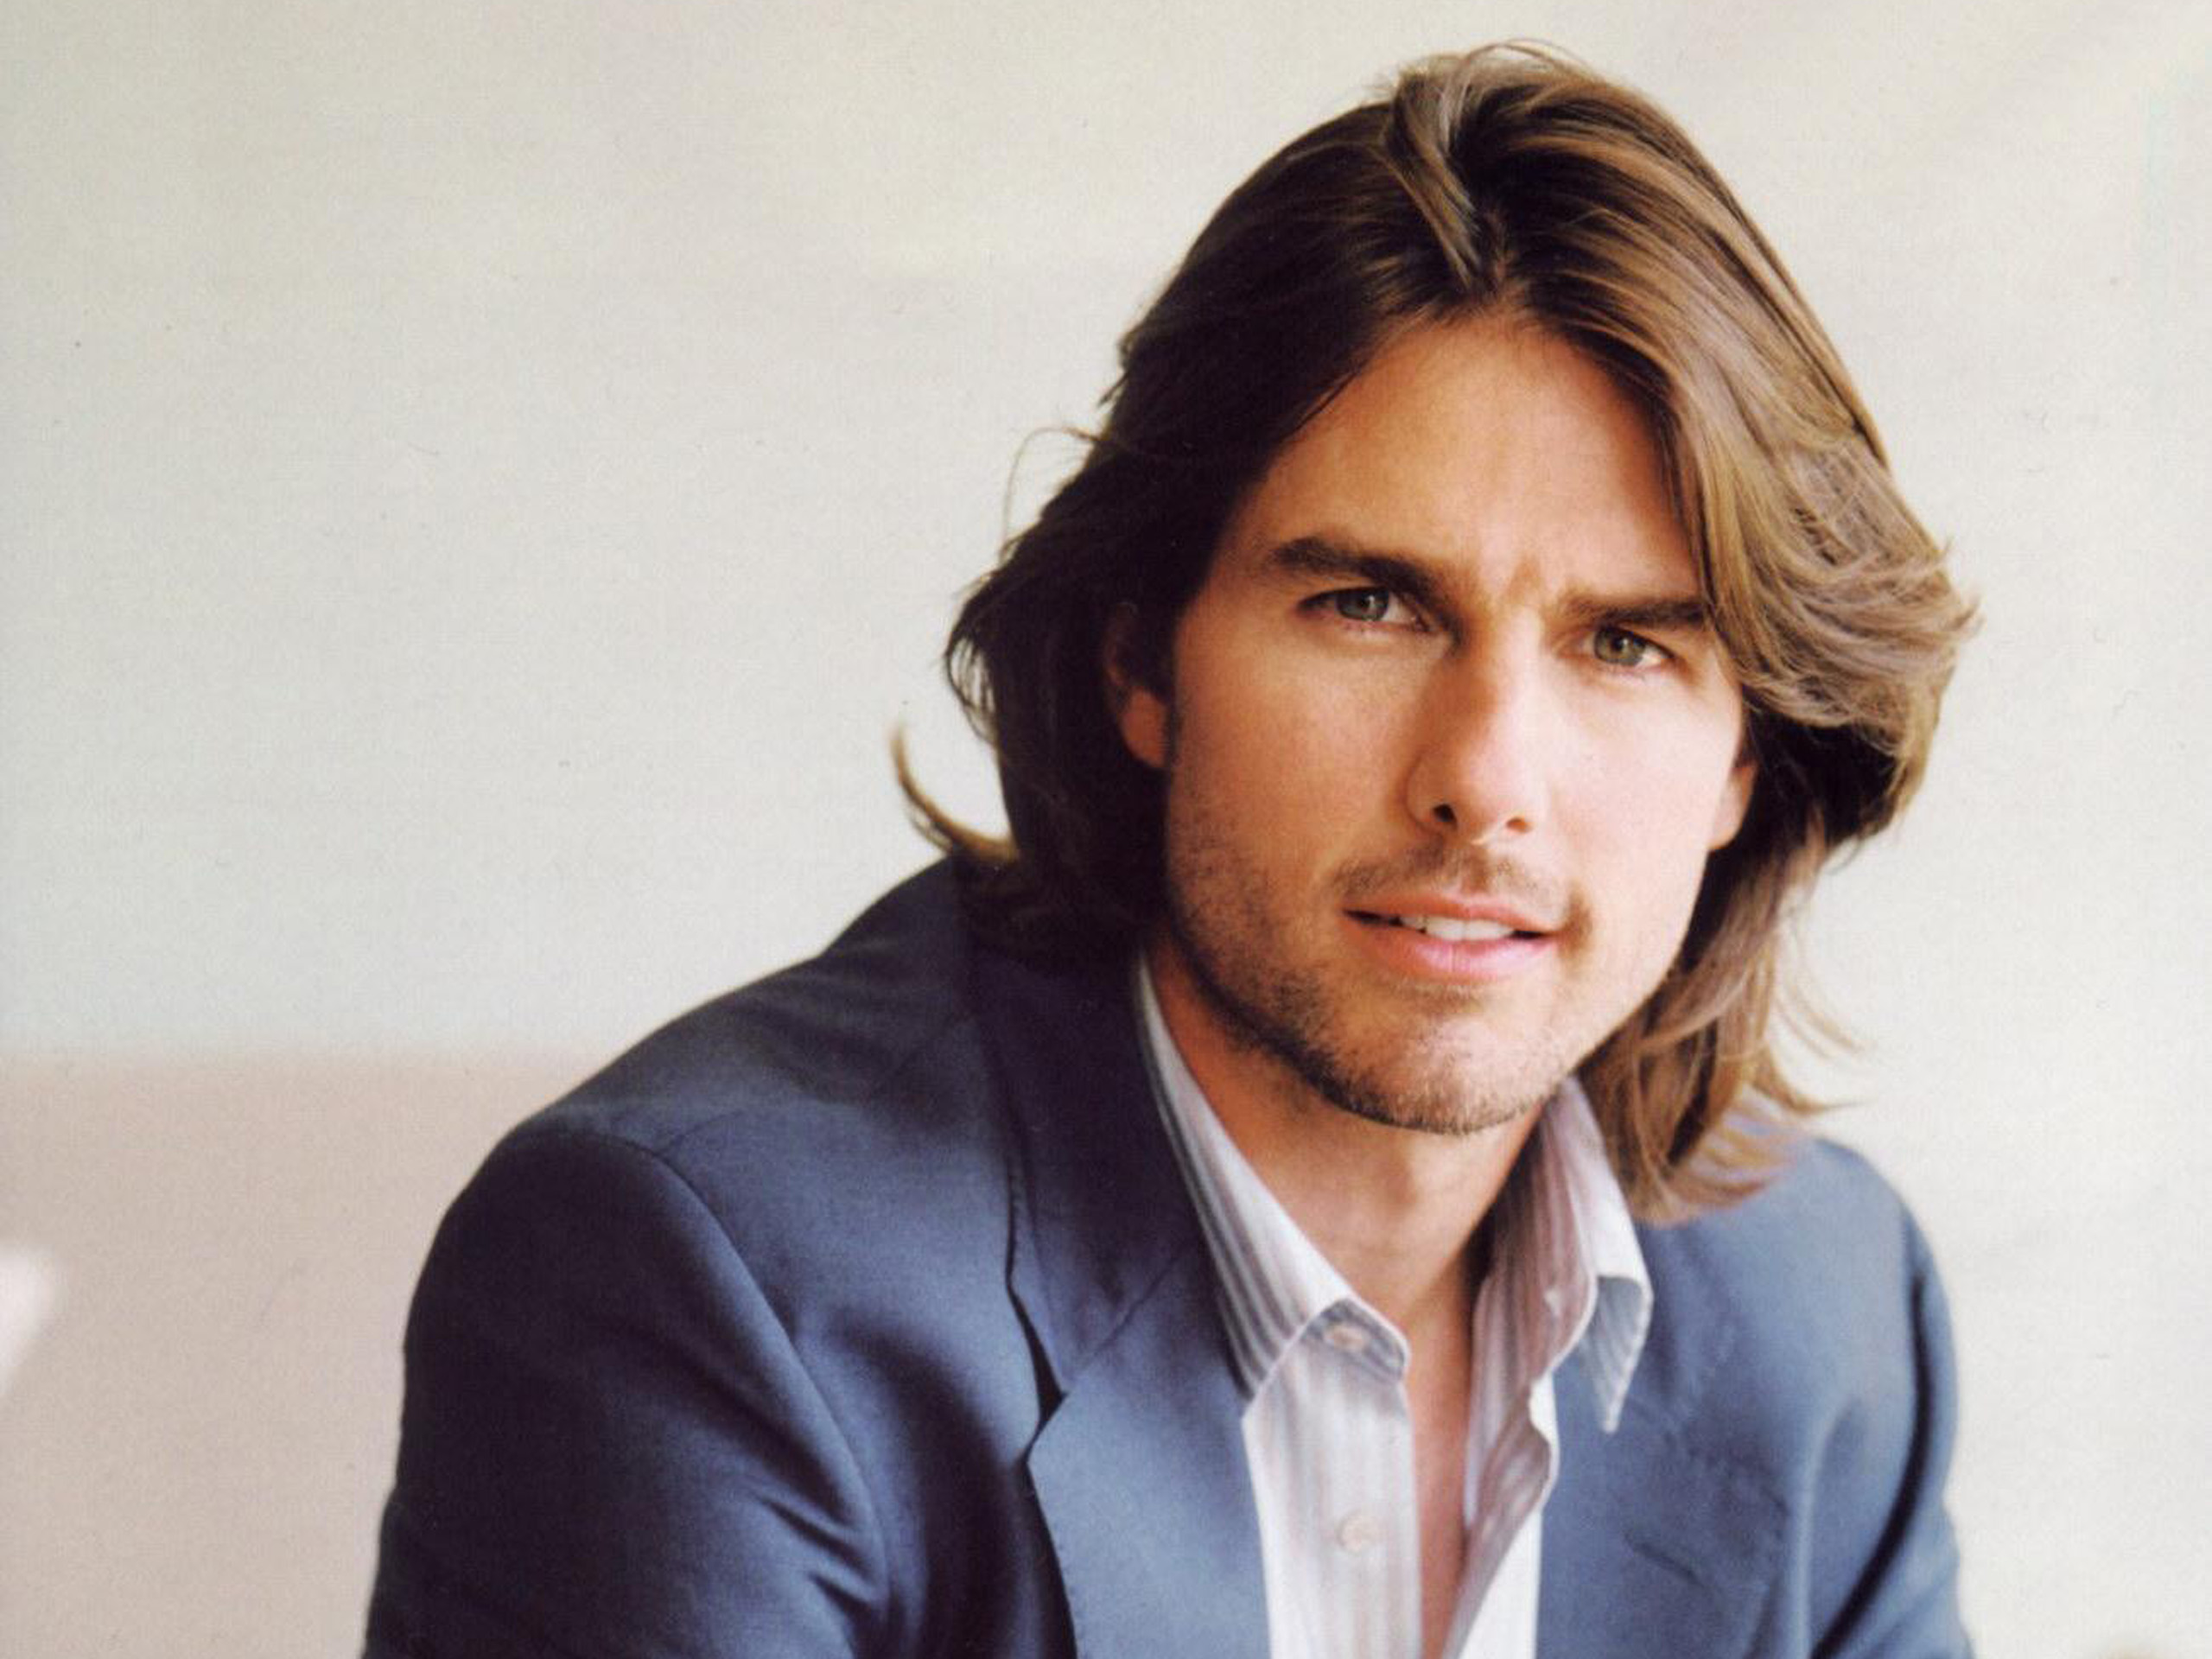 Tom Cruise images 49 wallpapers   Qularicom